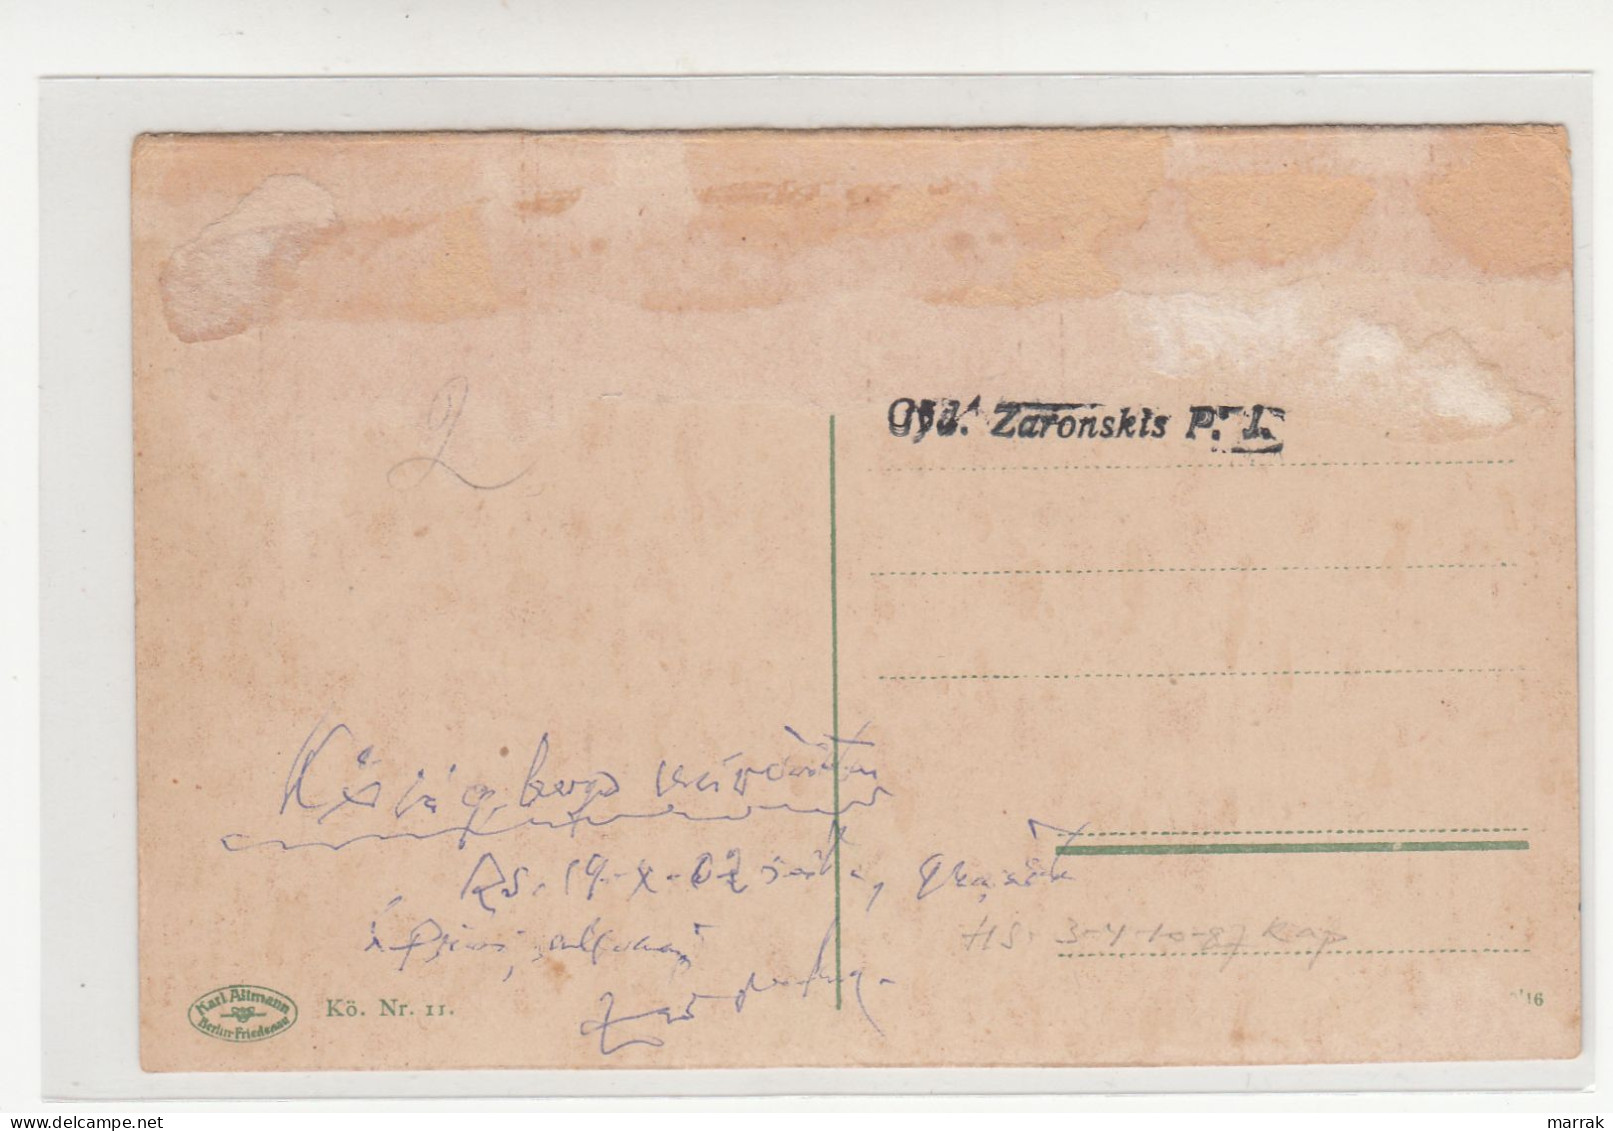 Konigsberg, Universitat, 1910' Postcard - Ostpreussen